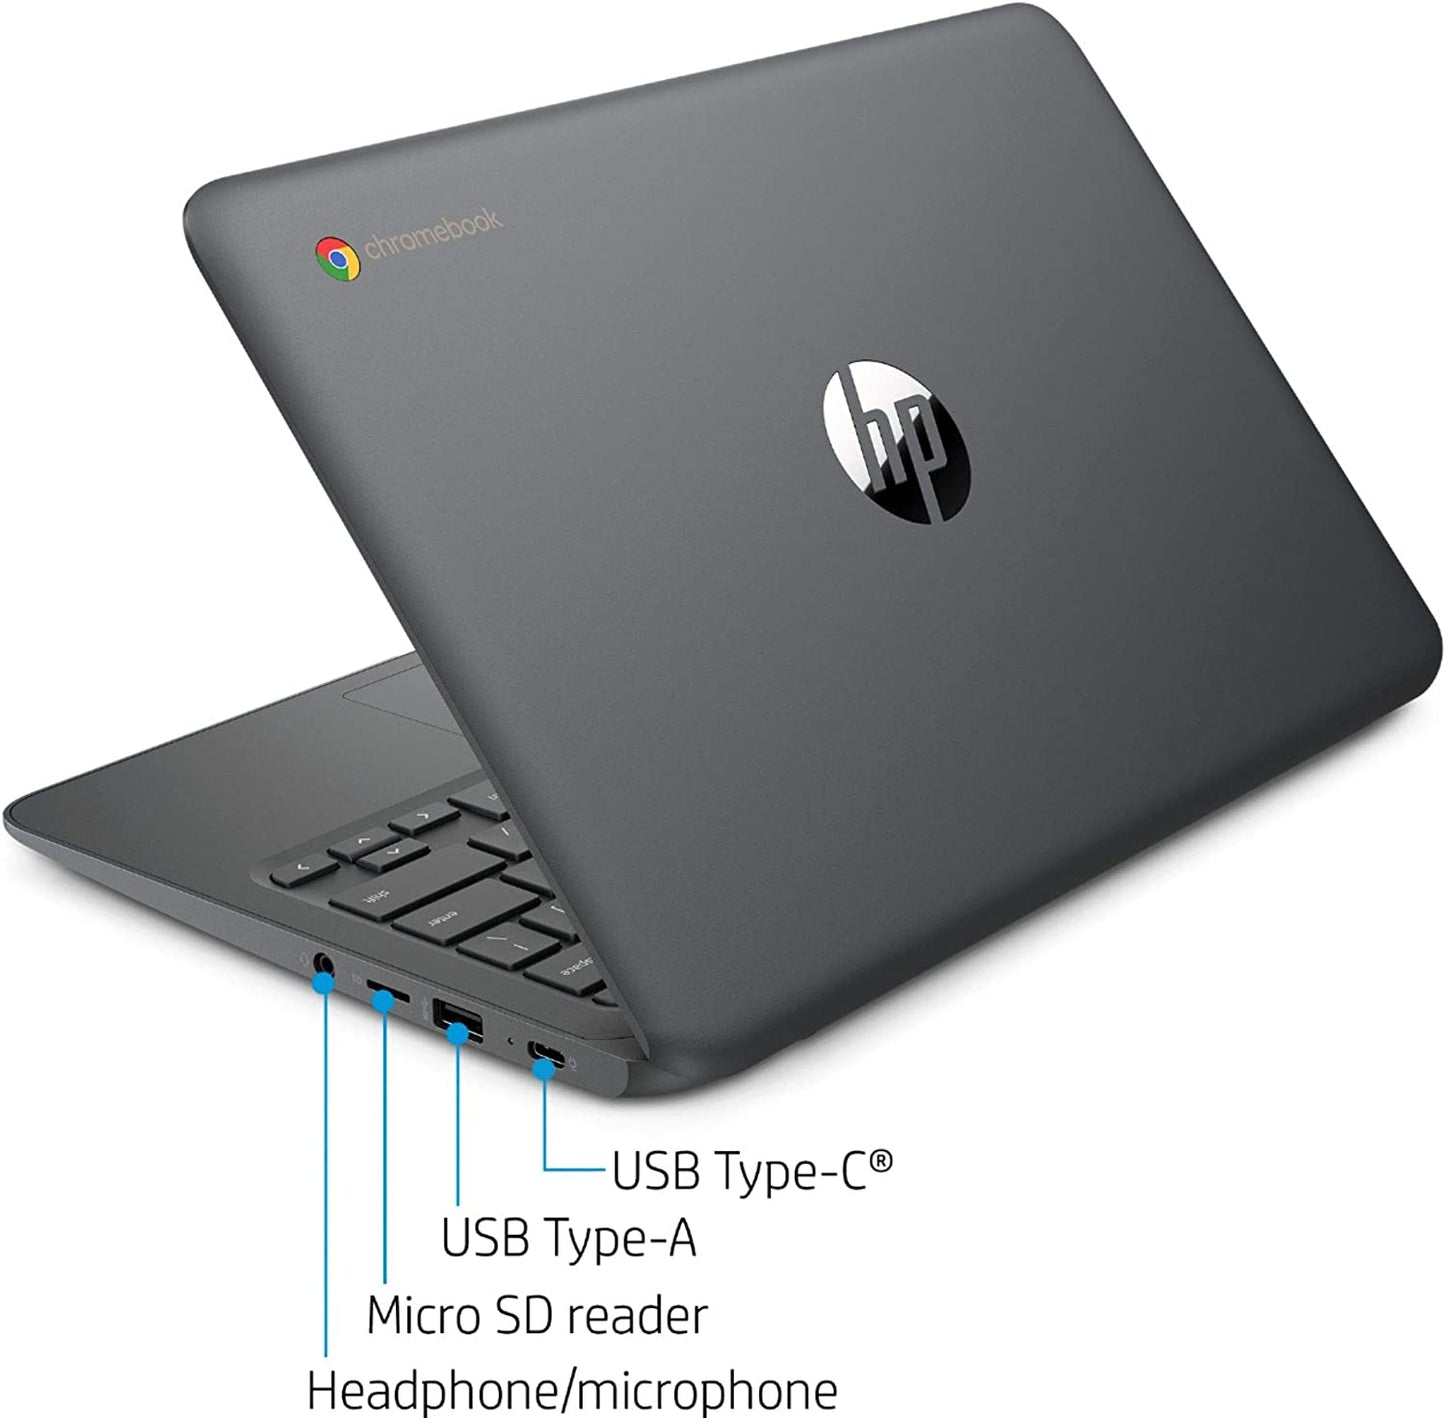 HP Chromebook Insignia, pantalla HD de 11.6 pulgadas, procesador Intel Celeron N3350, 4GB LPDDR2, 32GB eMMC